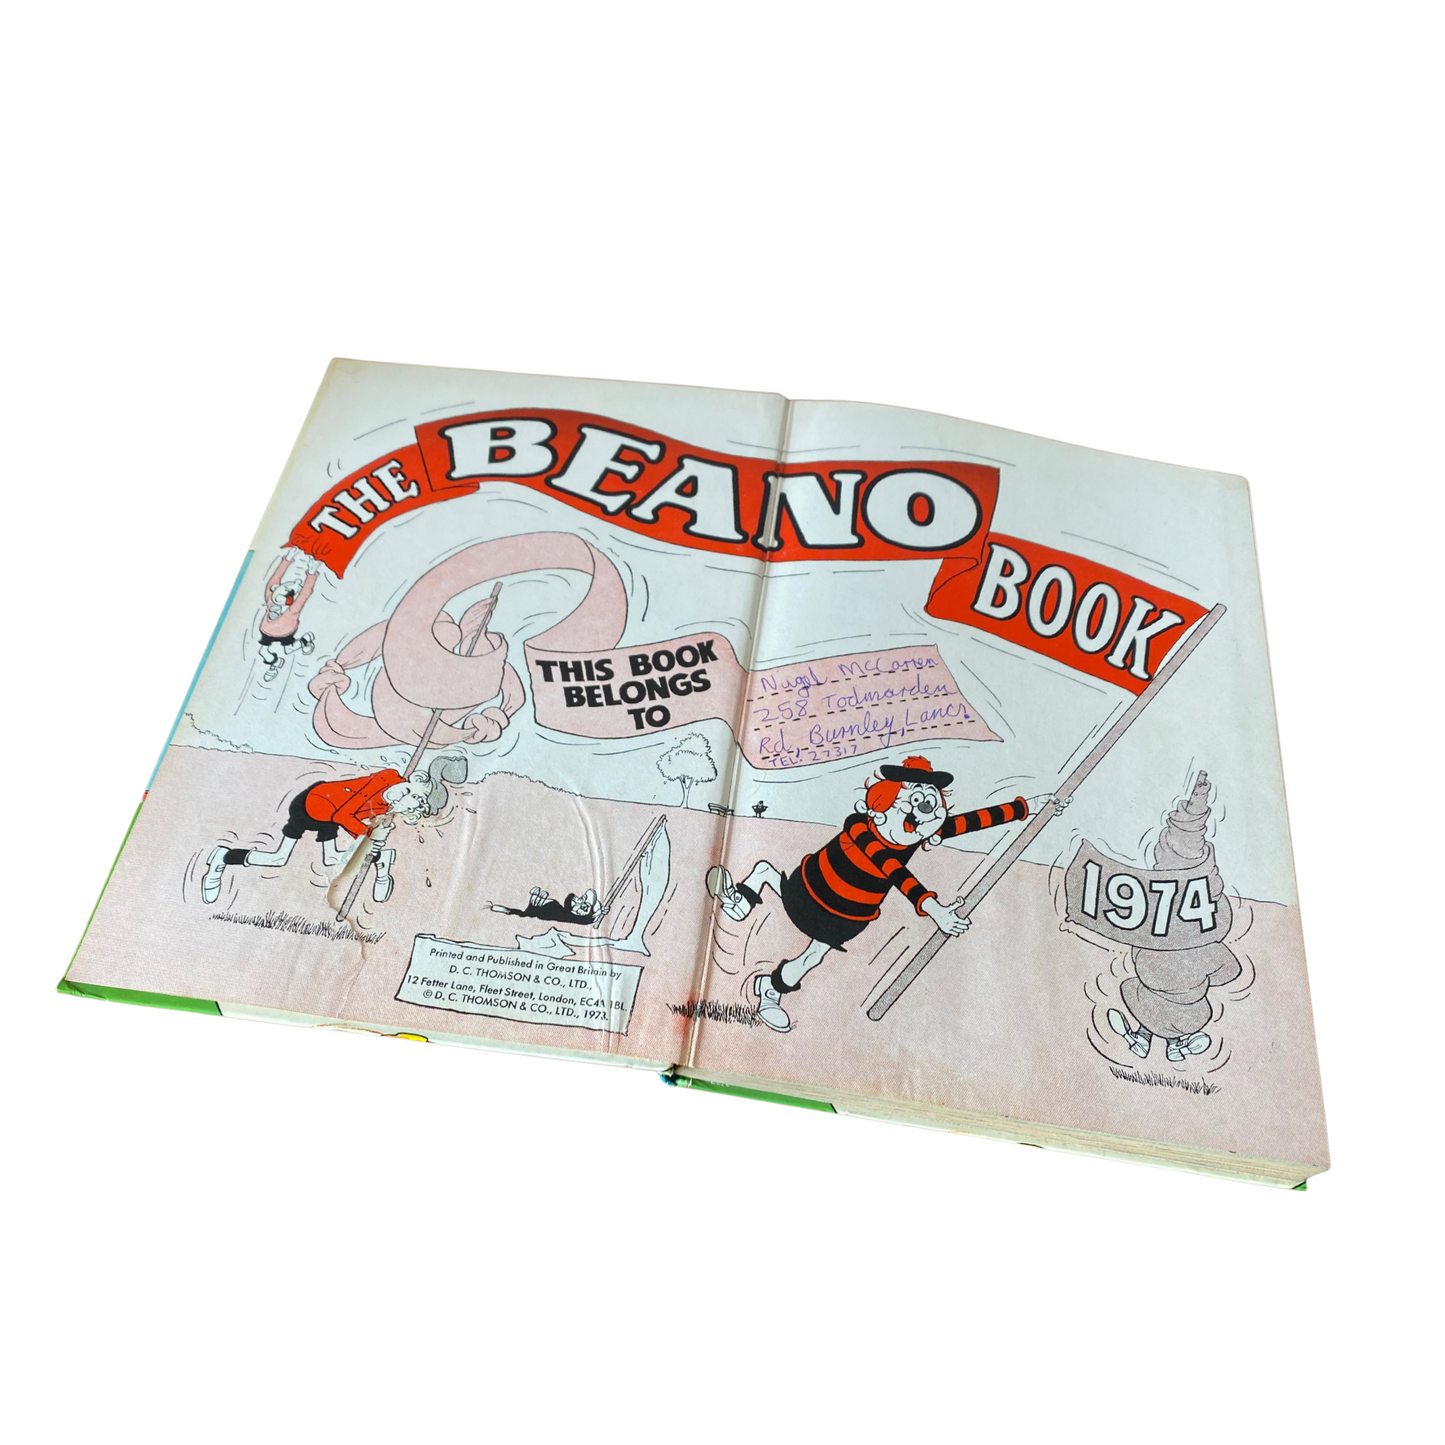 Collectible 70s Beano annual